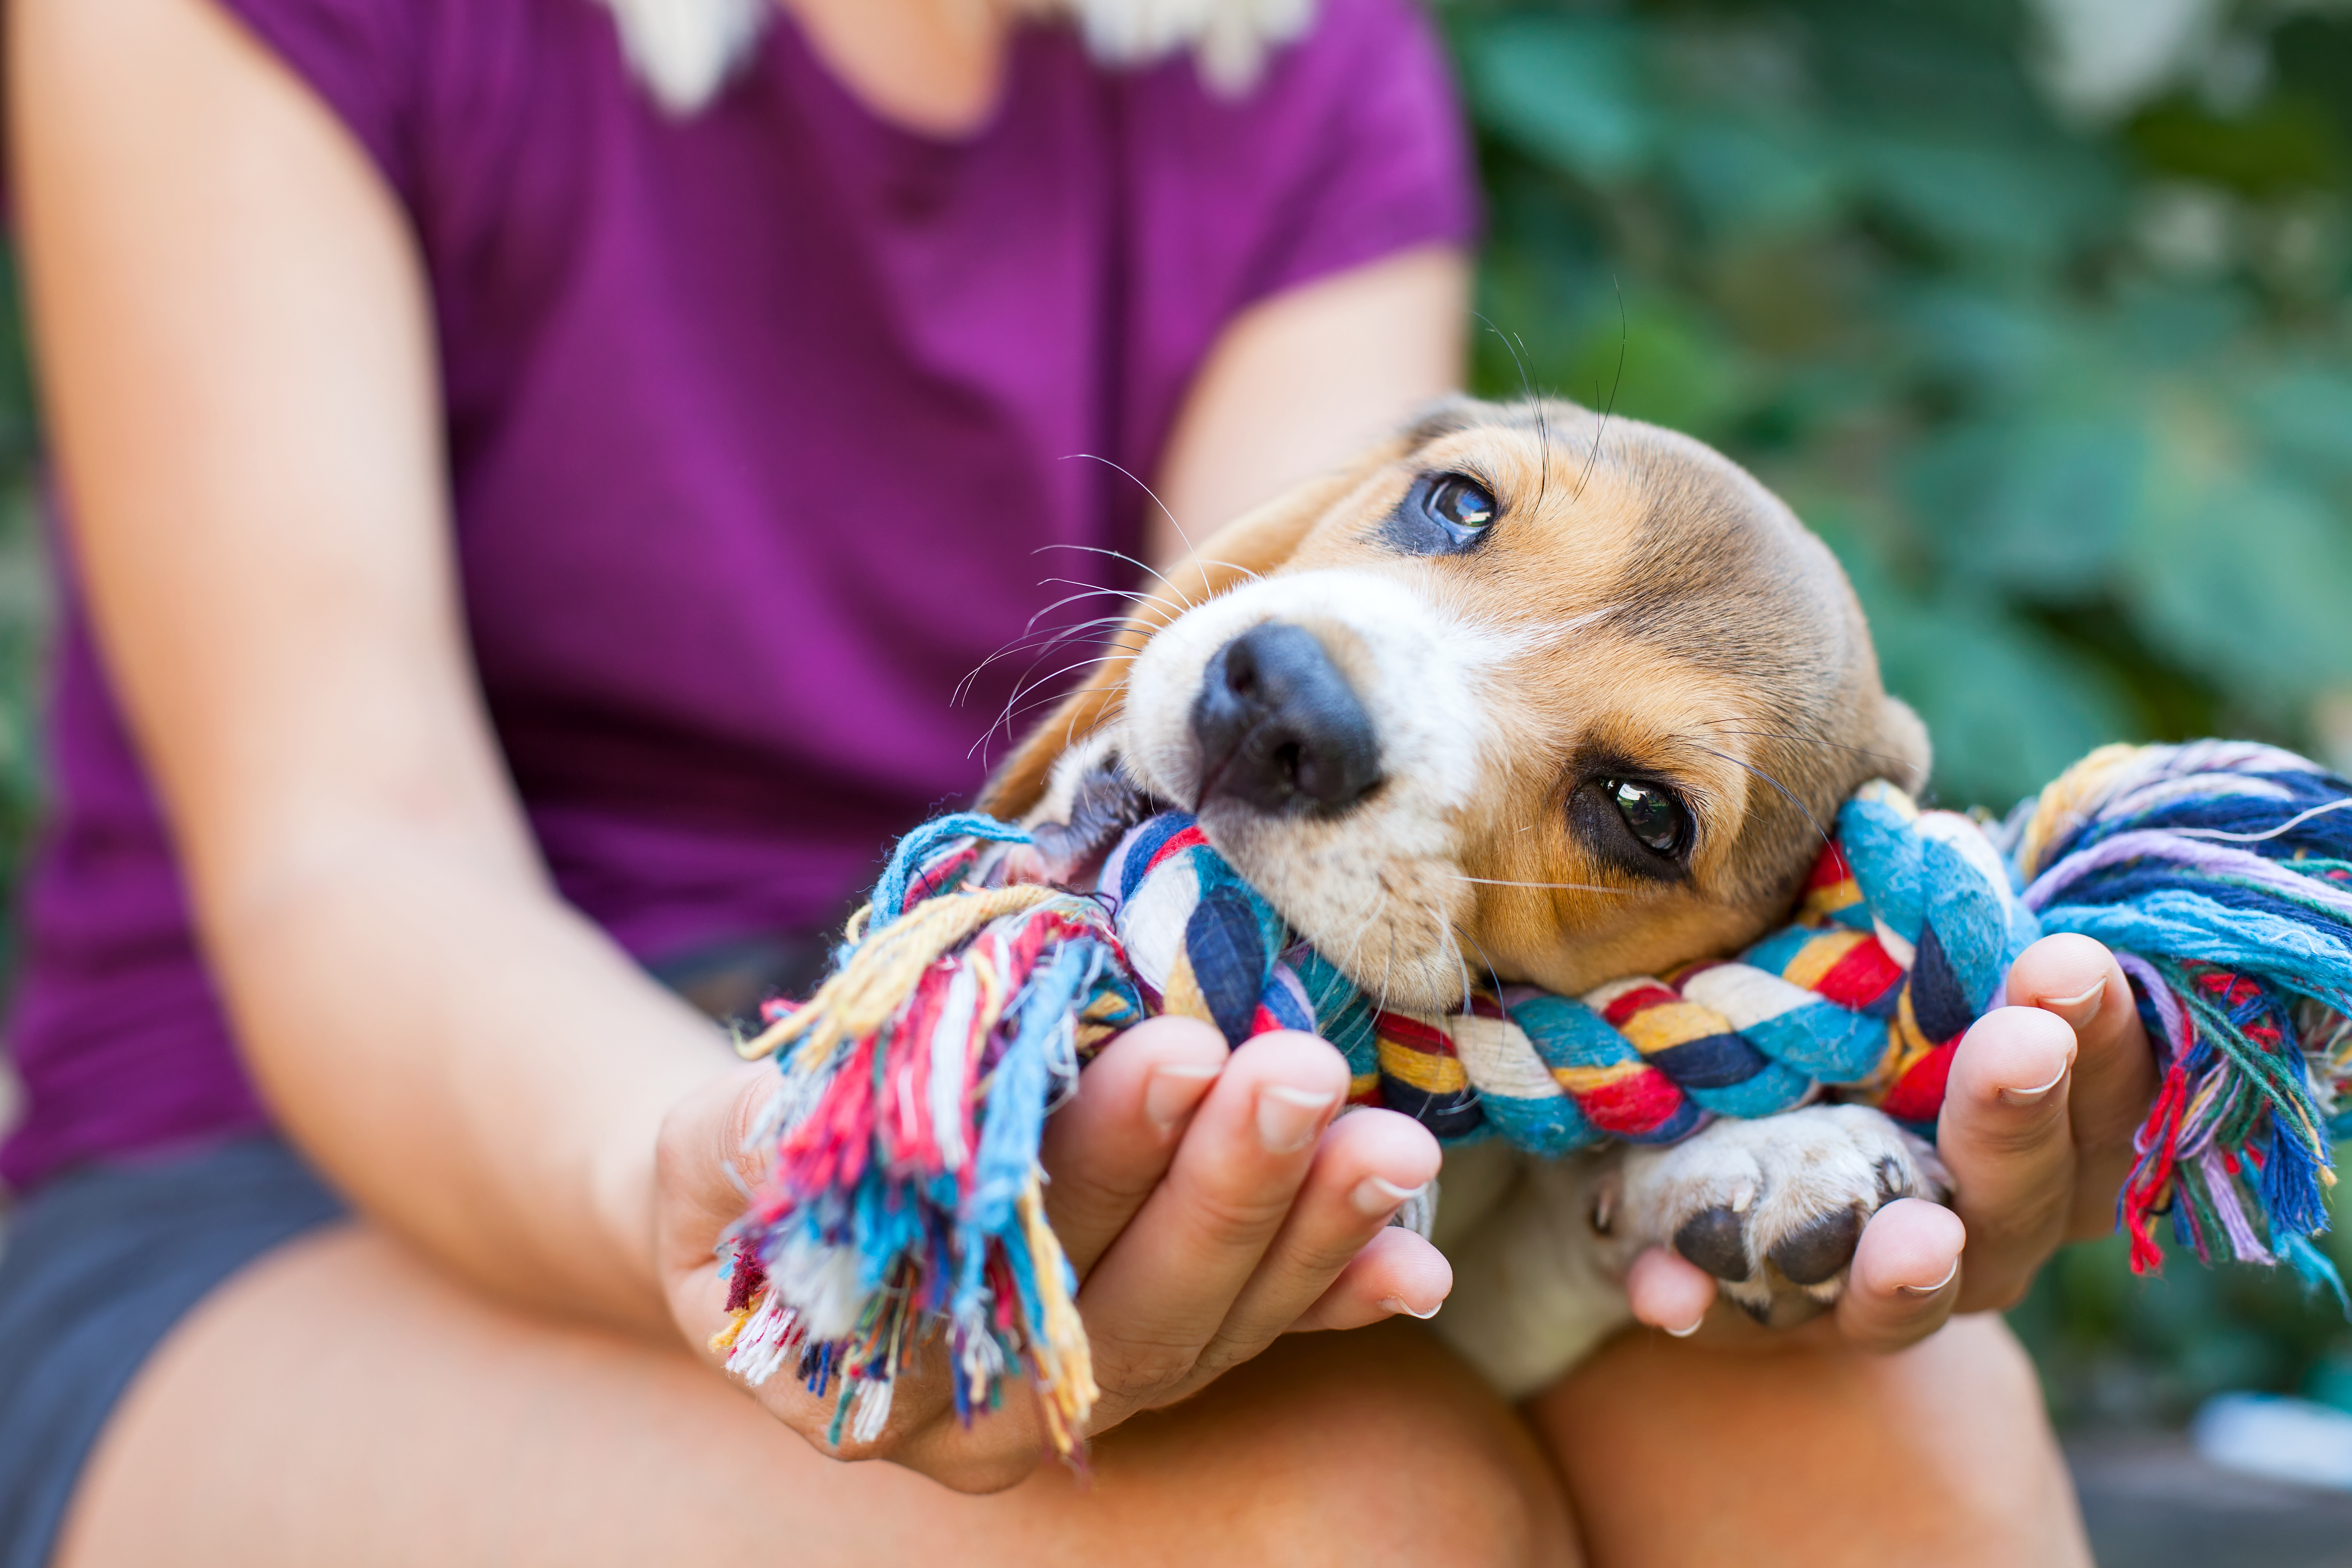 Cuddling with a beagle puppy 